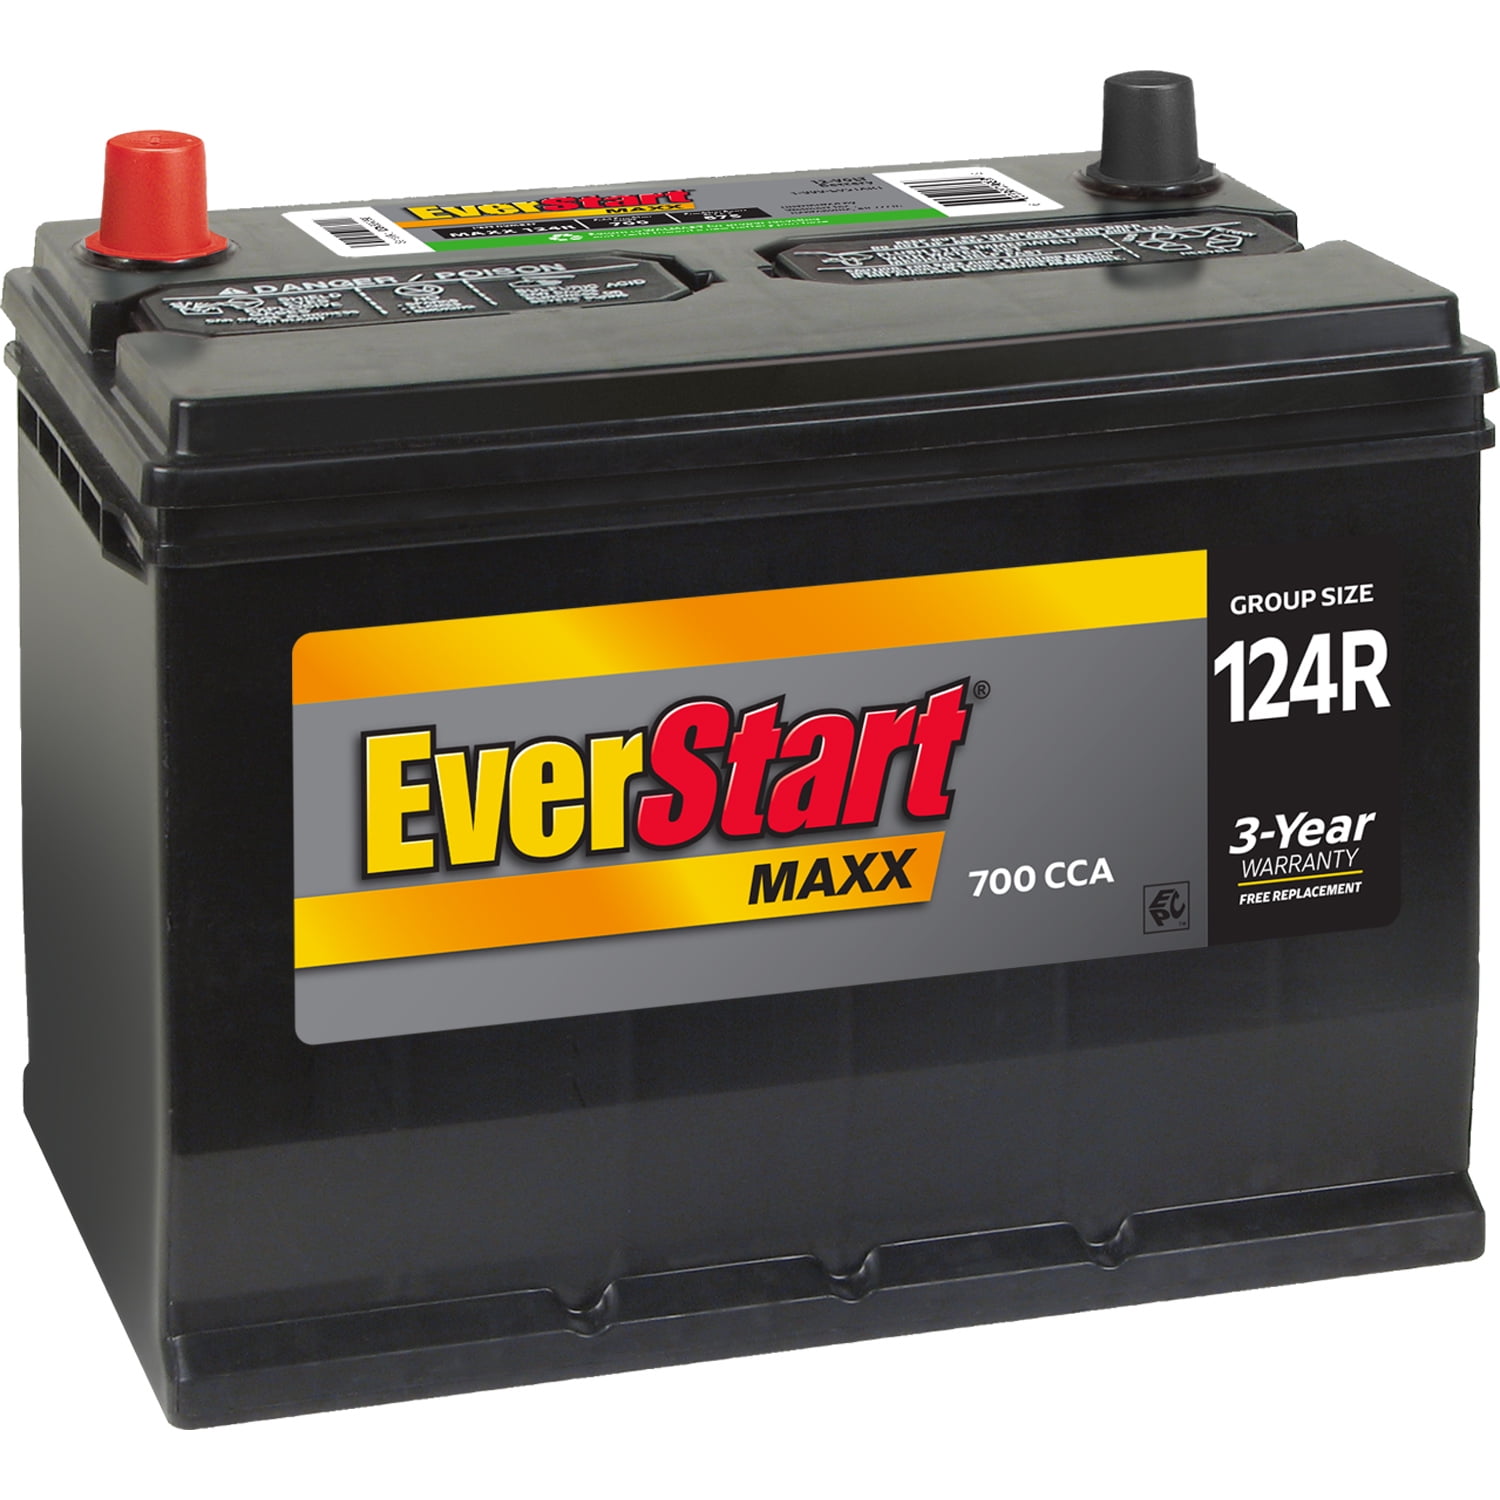 kugle abstraktion dash EverStart Maxx Lead Acid Automotive Battery, Group Size 124R 12 Volt, 700  CCA - Walmart.com